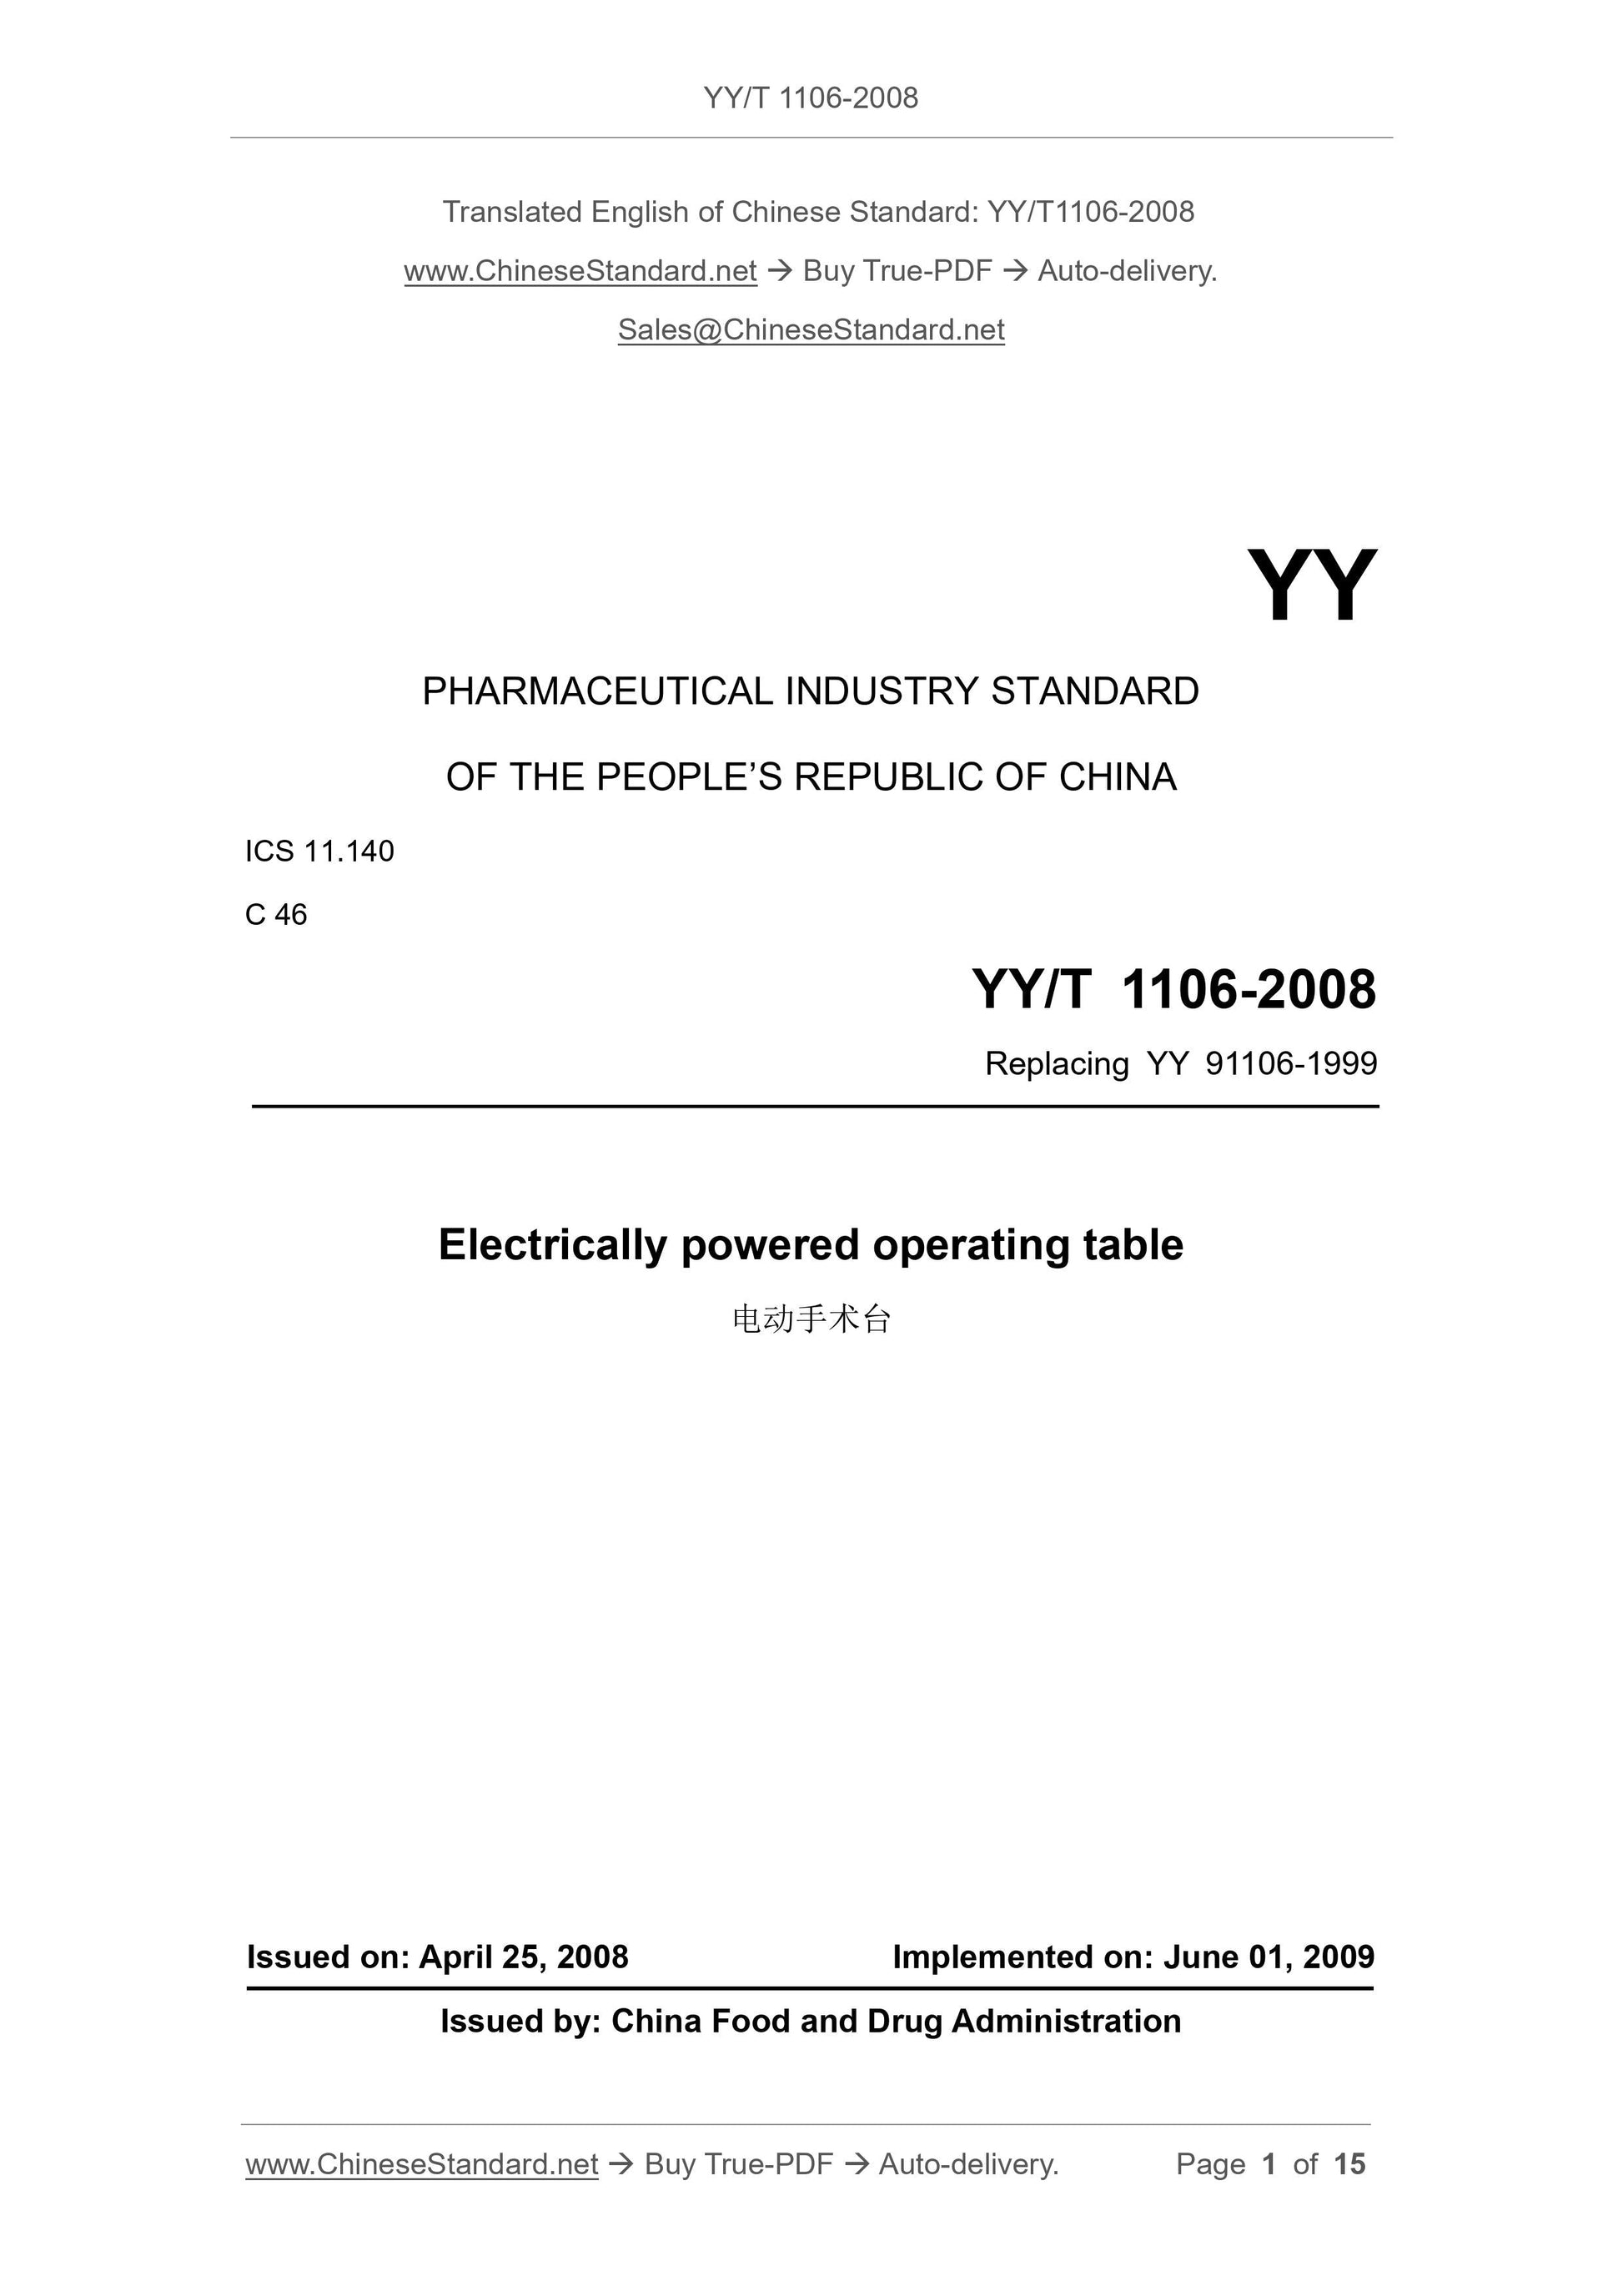 YY/T 1106-2008 Page 1